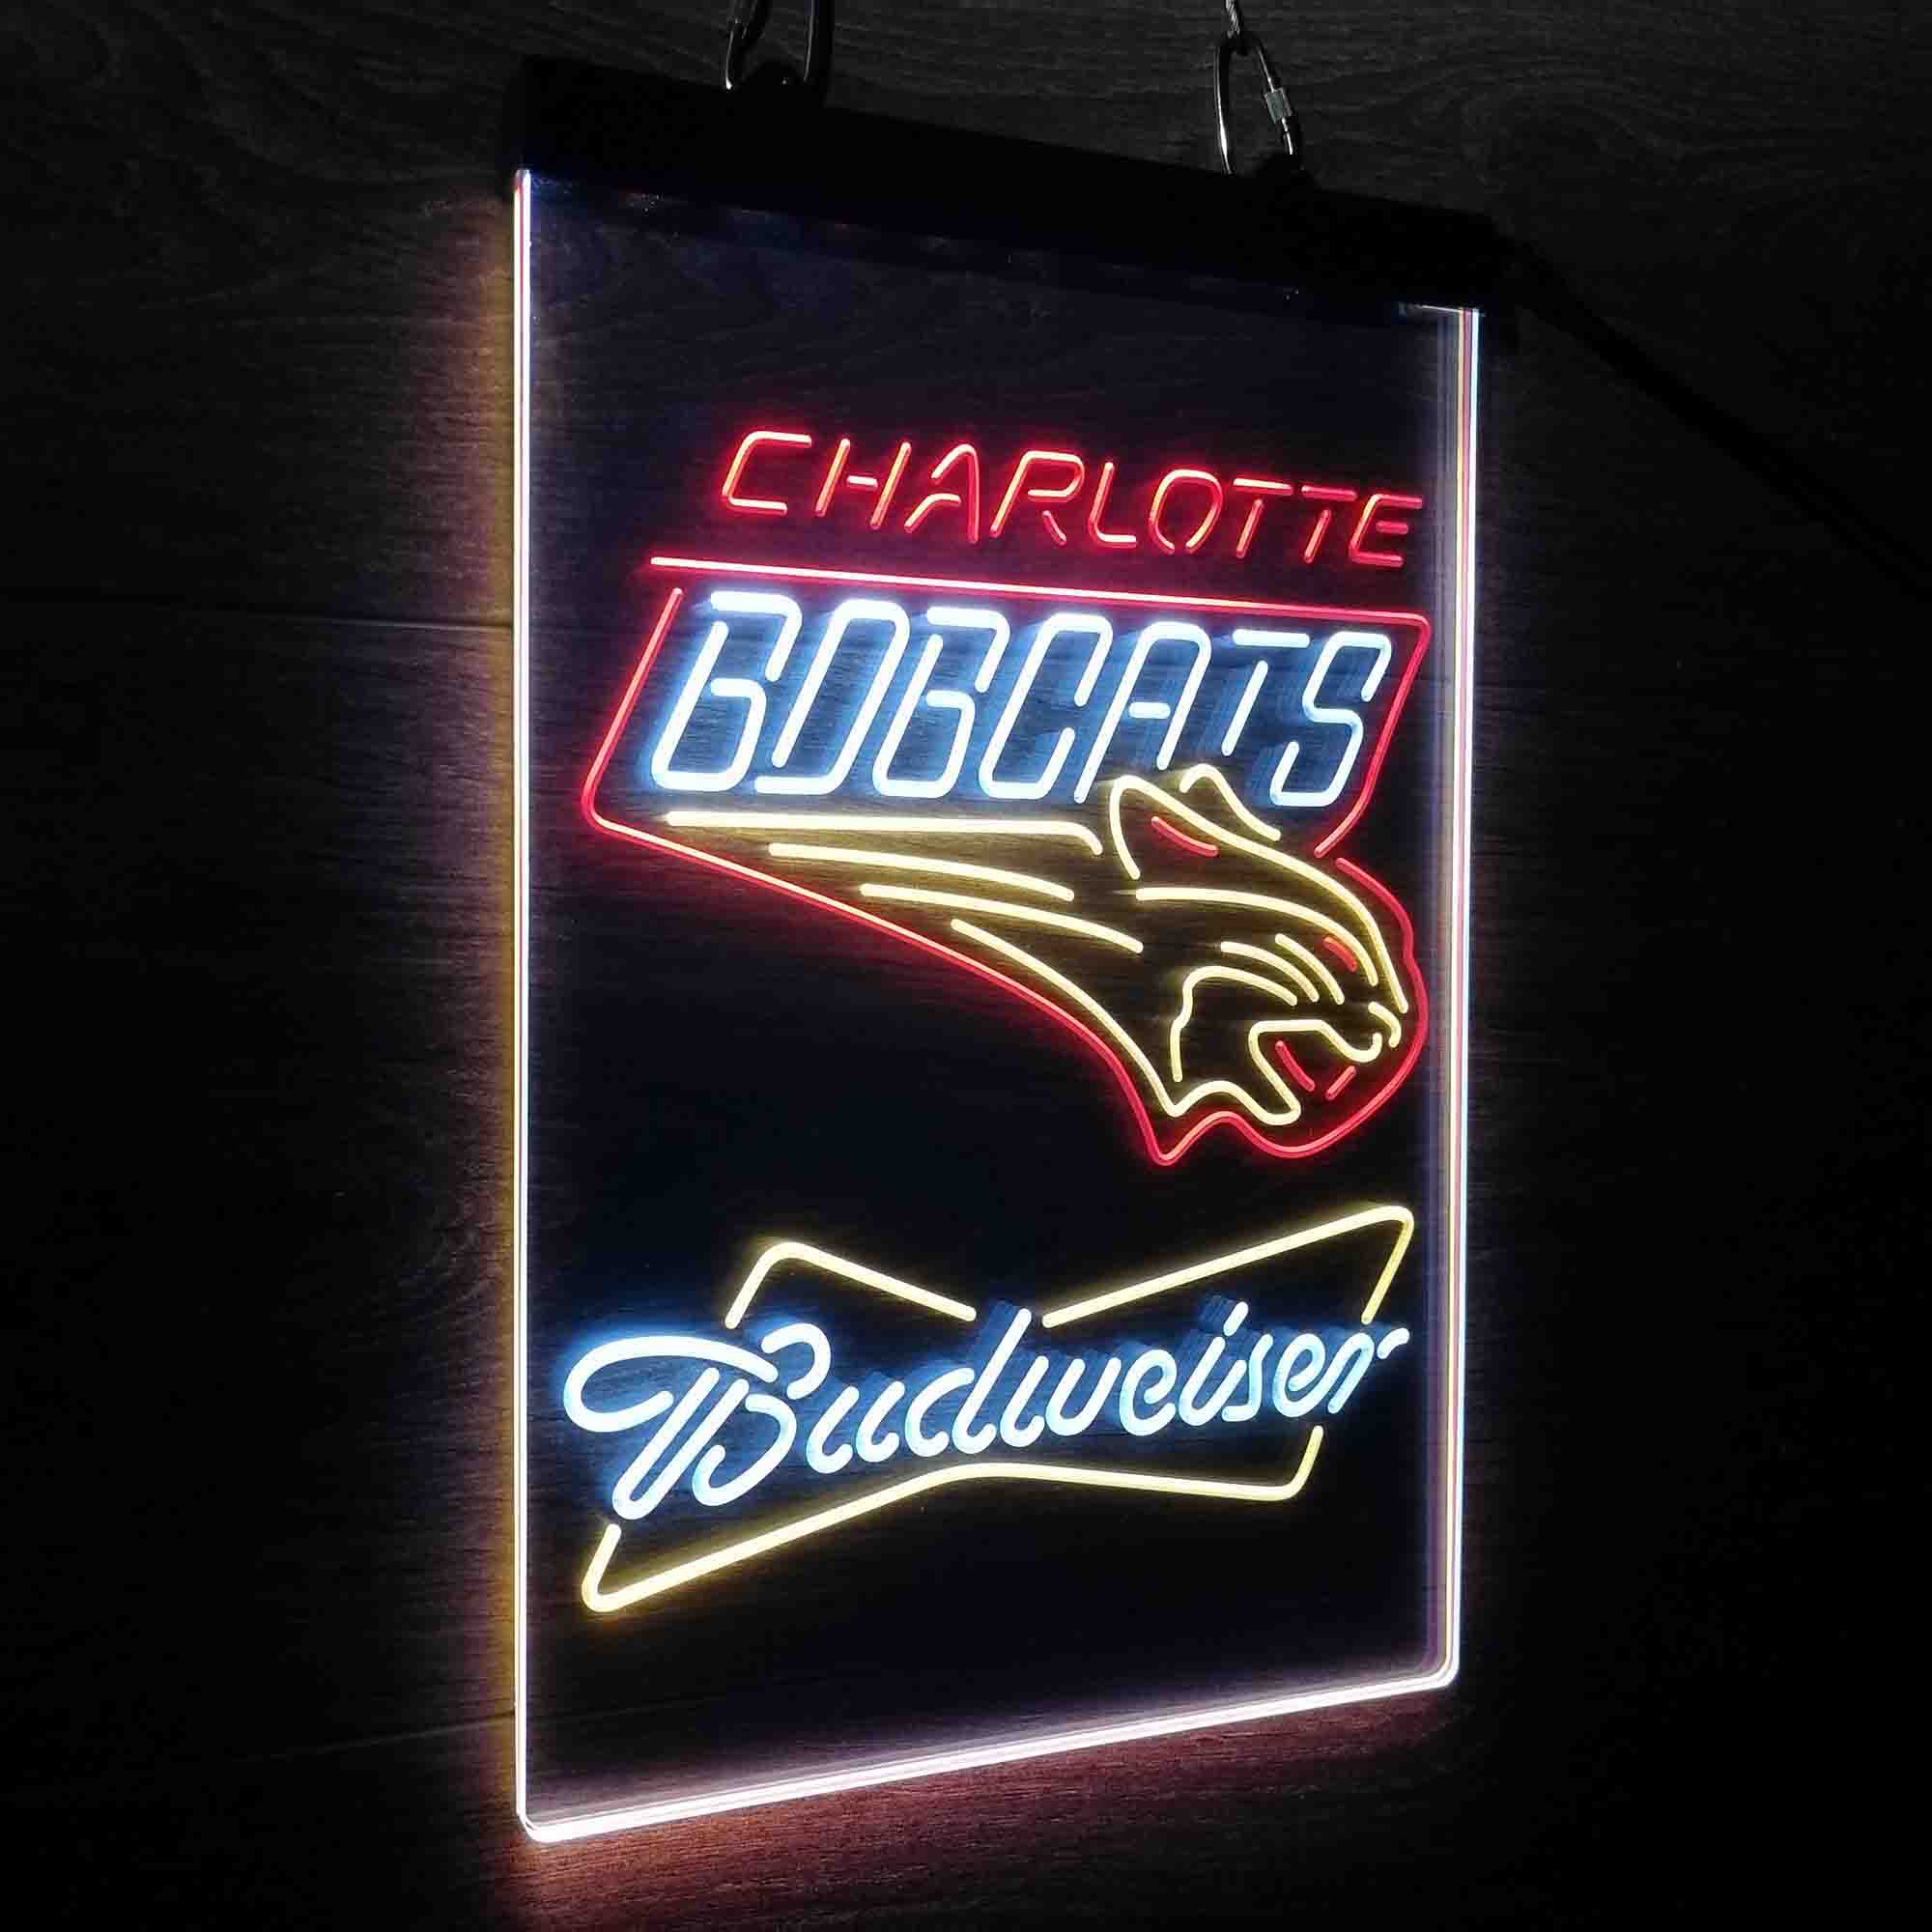 Charlotte Bobcats Nba Budweiser Neon LED Sign 3 Colors